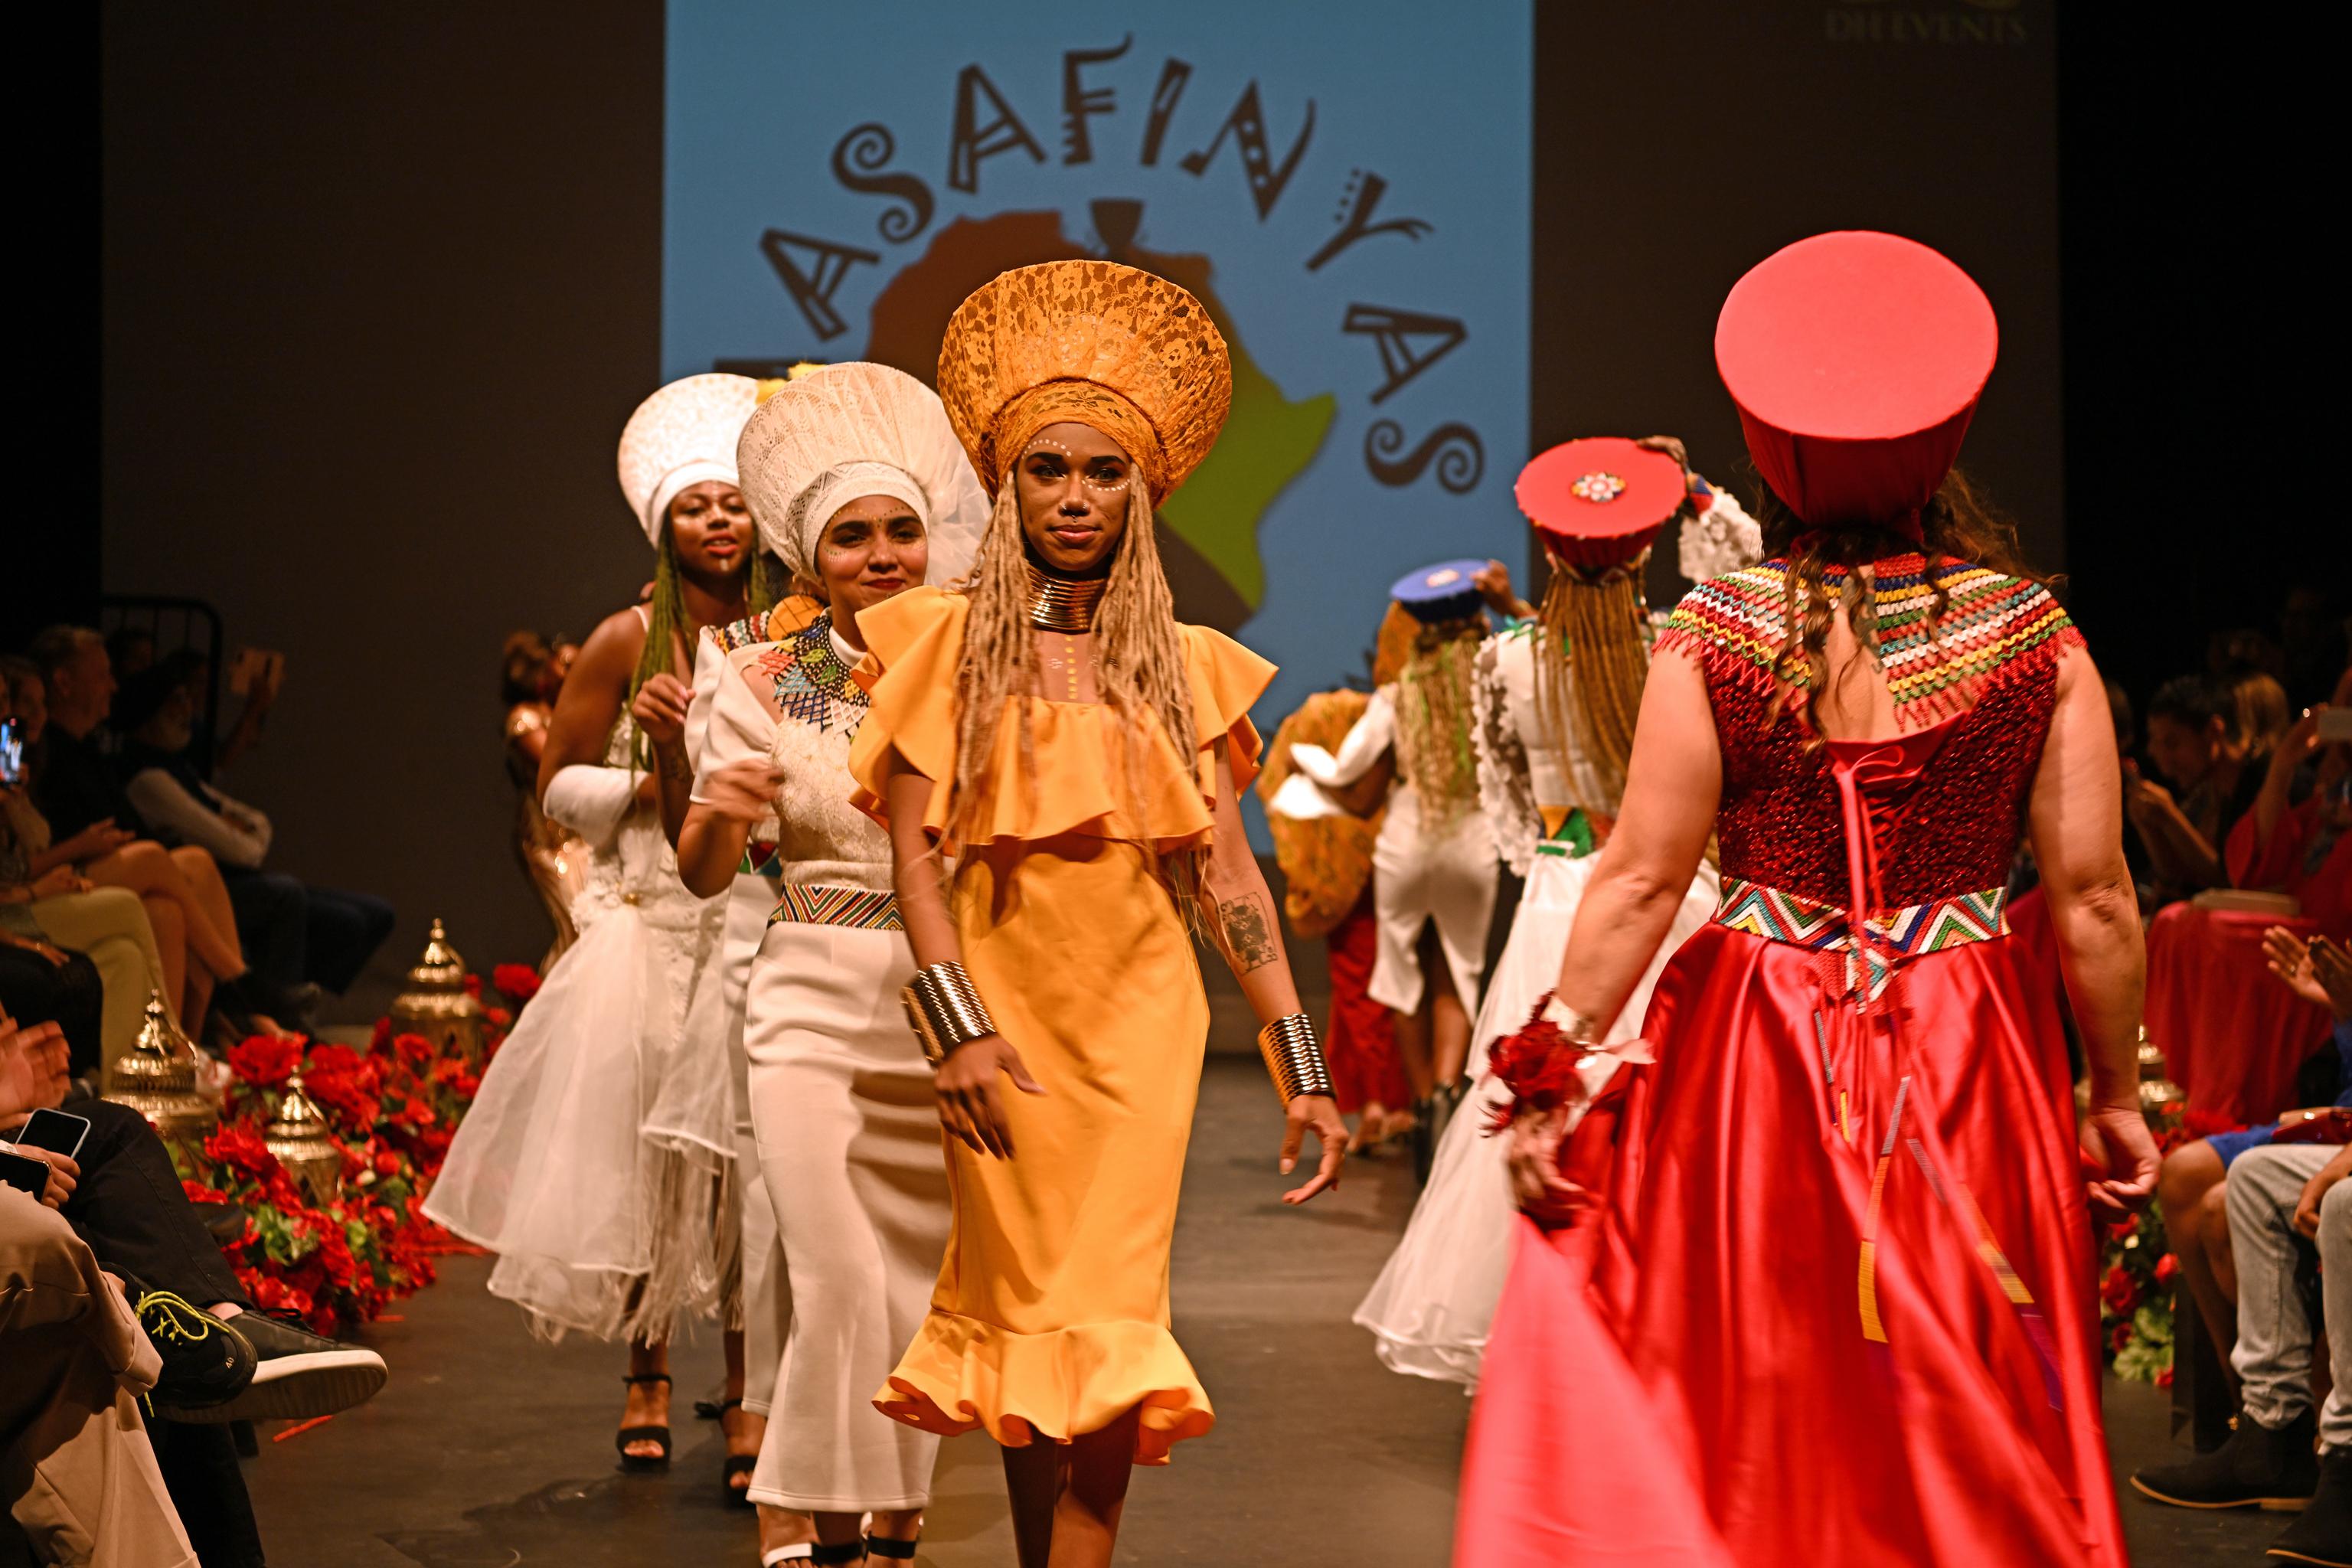 Masafinyas fashion show